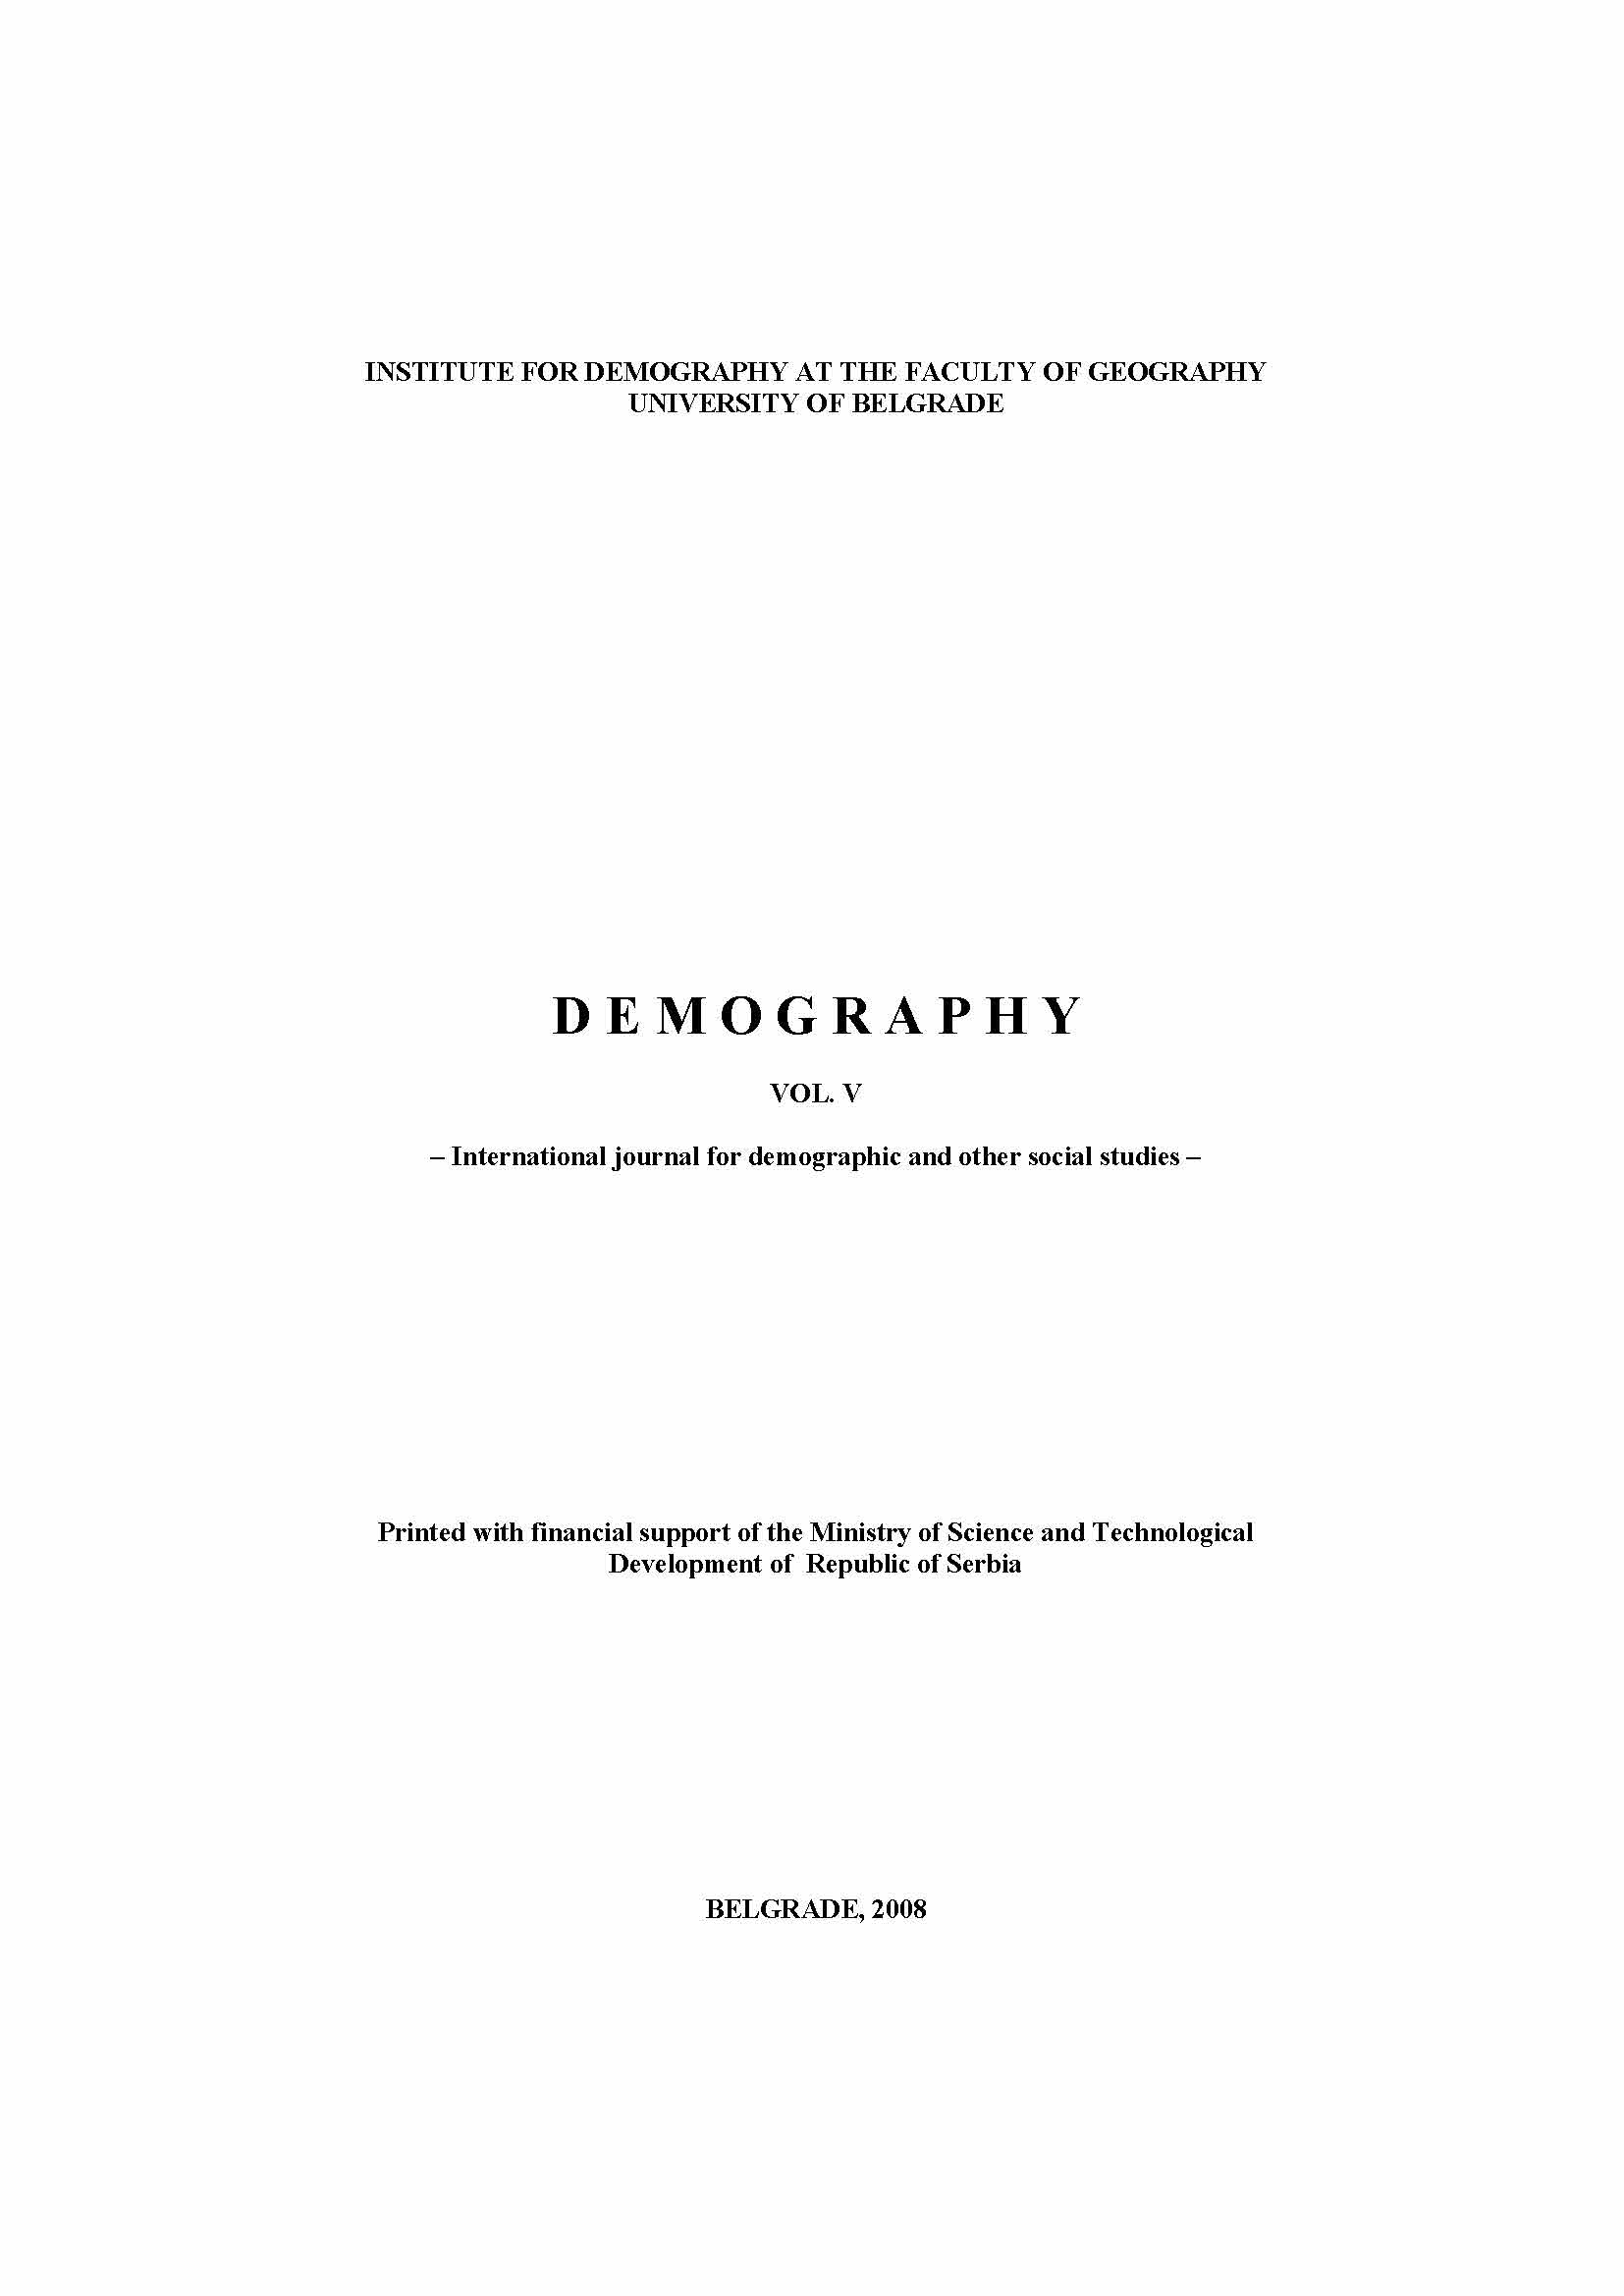 Basic Tendencies of Demographic of Vitanovac and Surroundings Cover Image